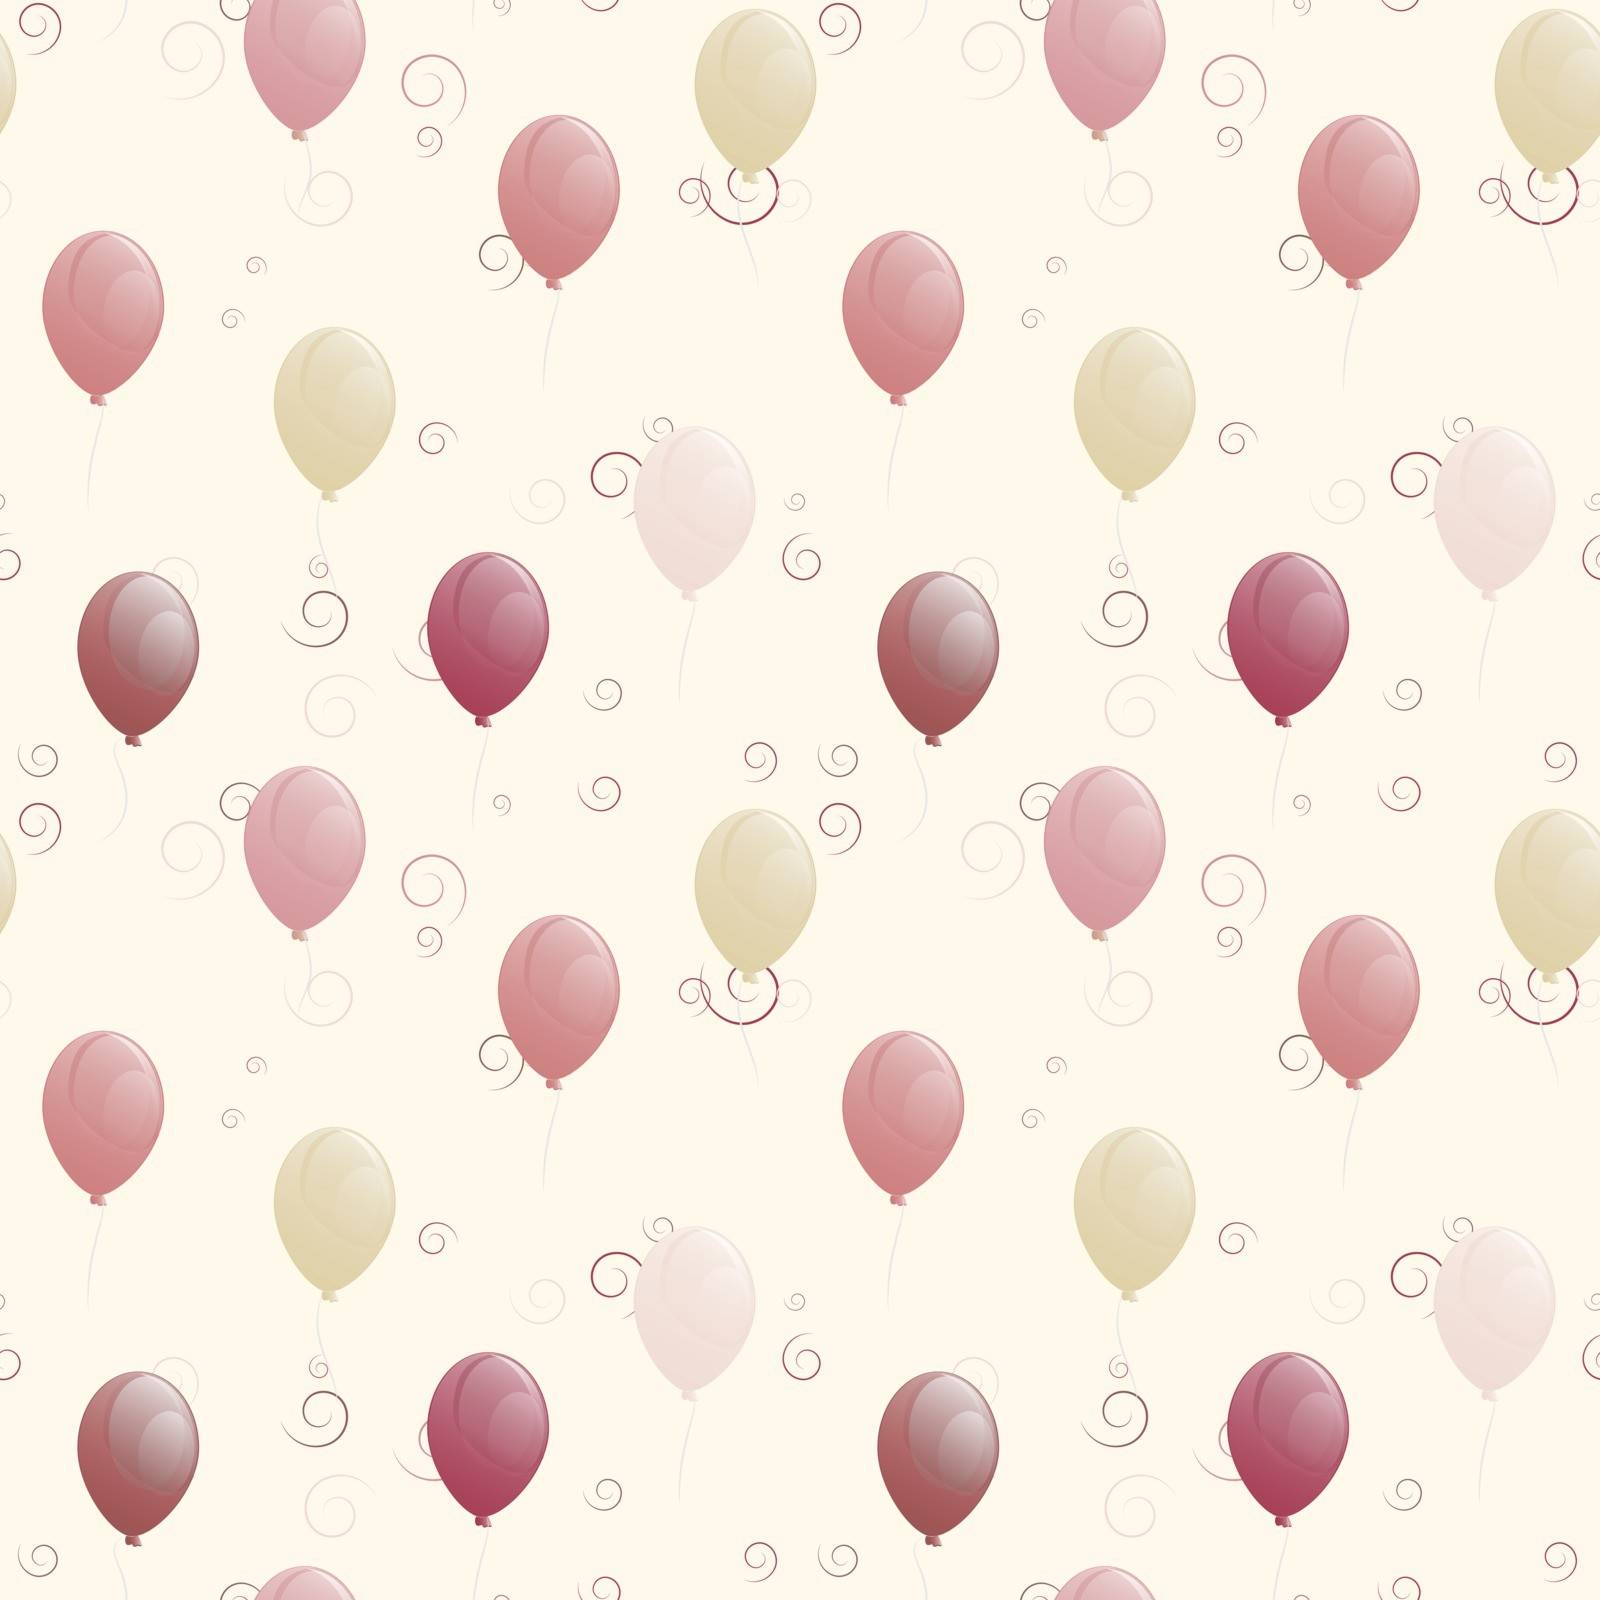 balloons seamless texture by LittleCuckoo